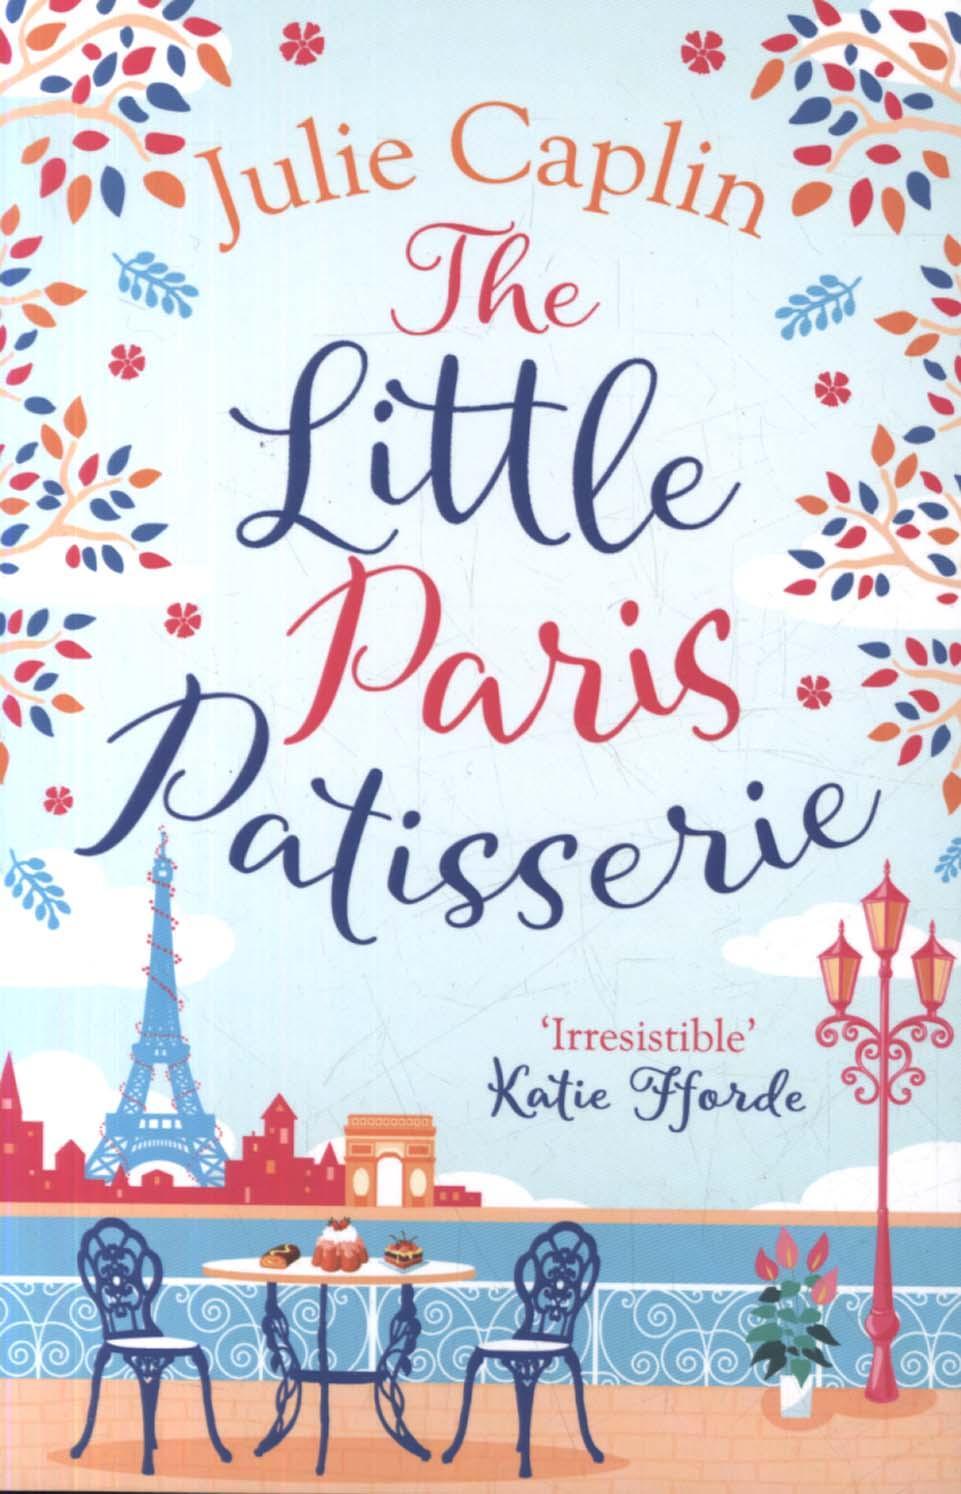 Little Paris Patisserie